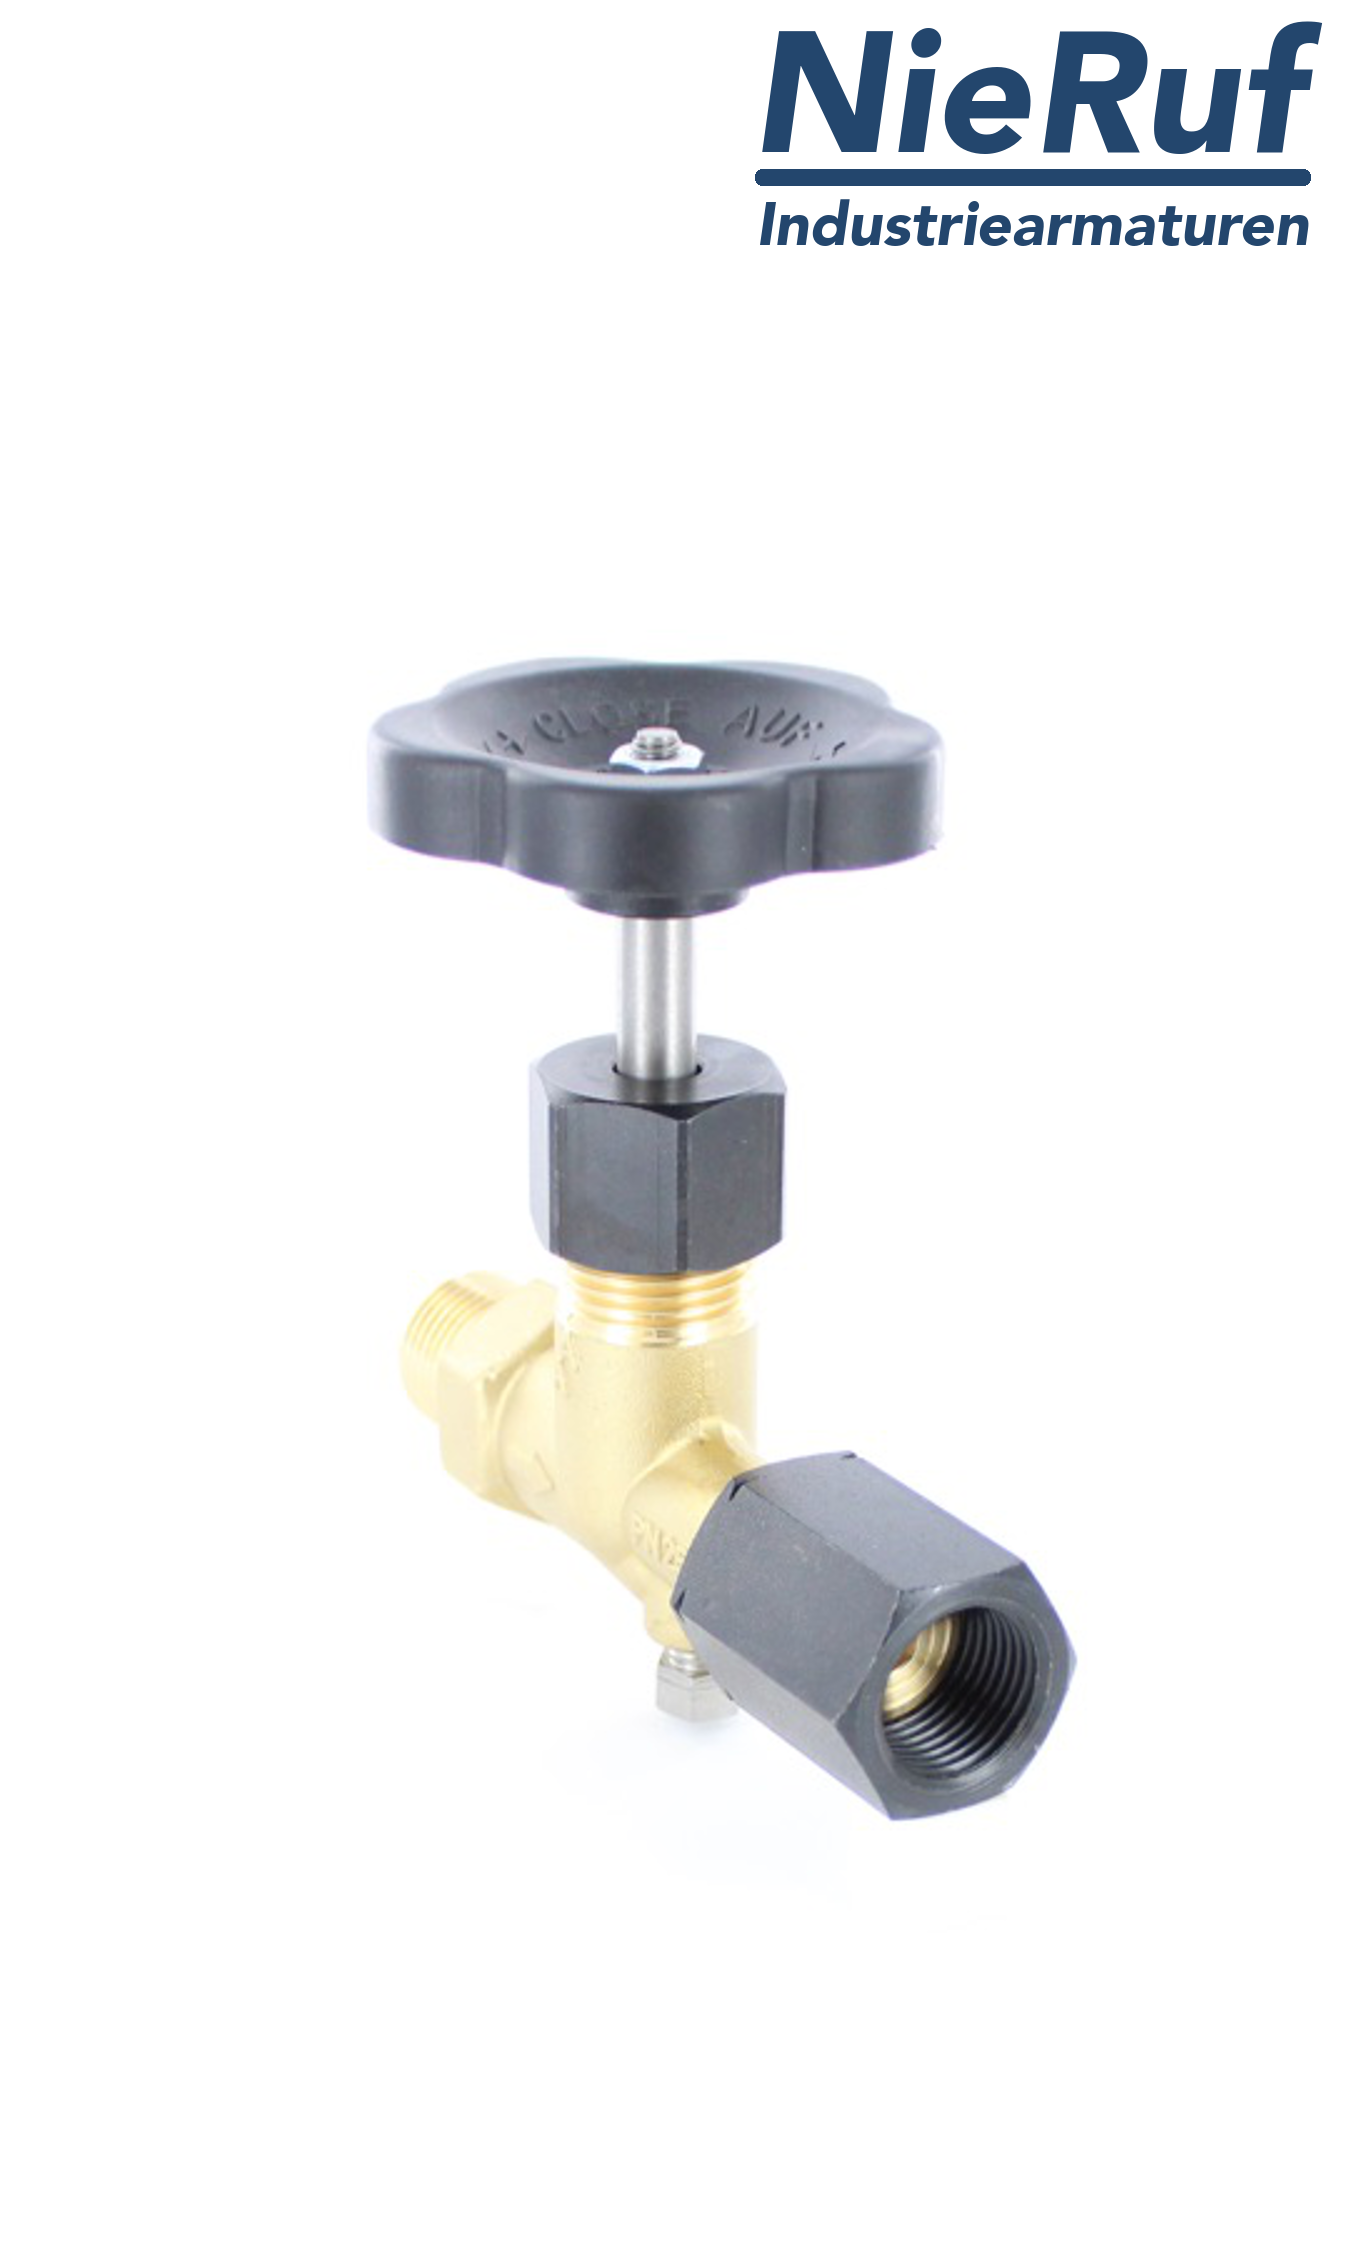 manometer gauge valves male thread x sleeve DIN 16270 brass 250 bar